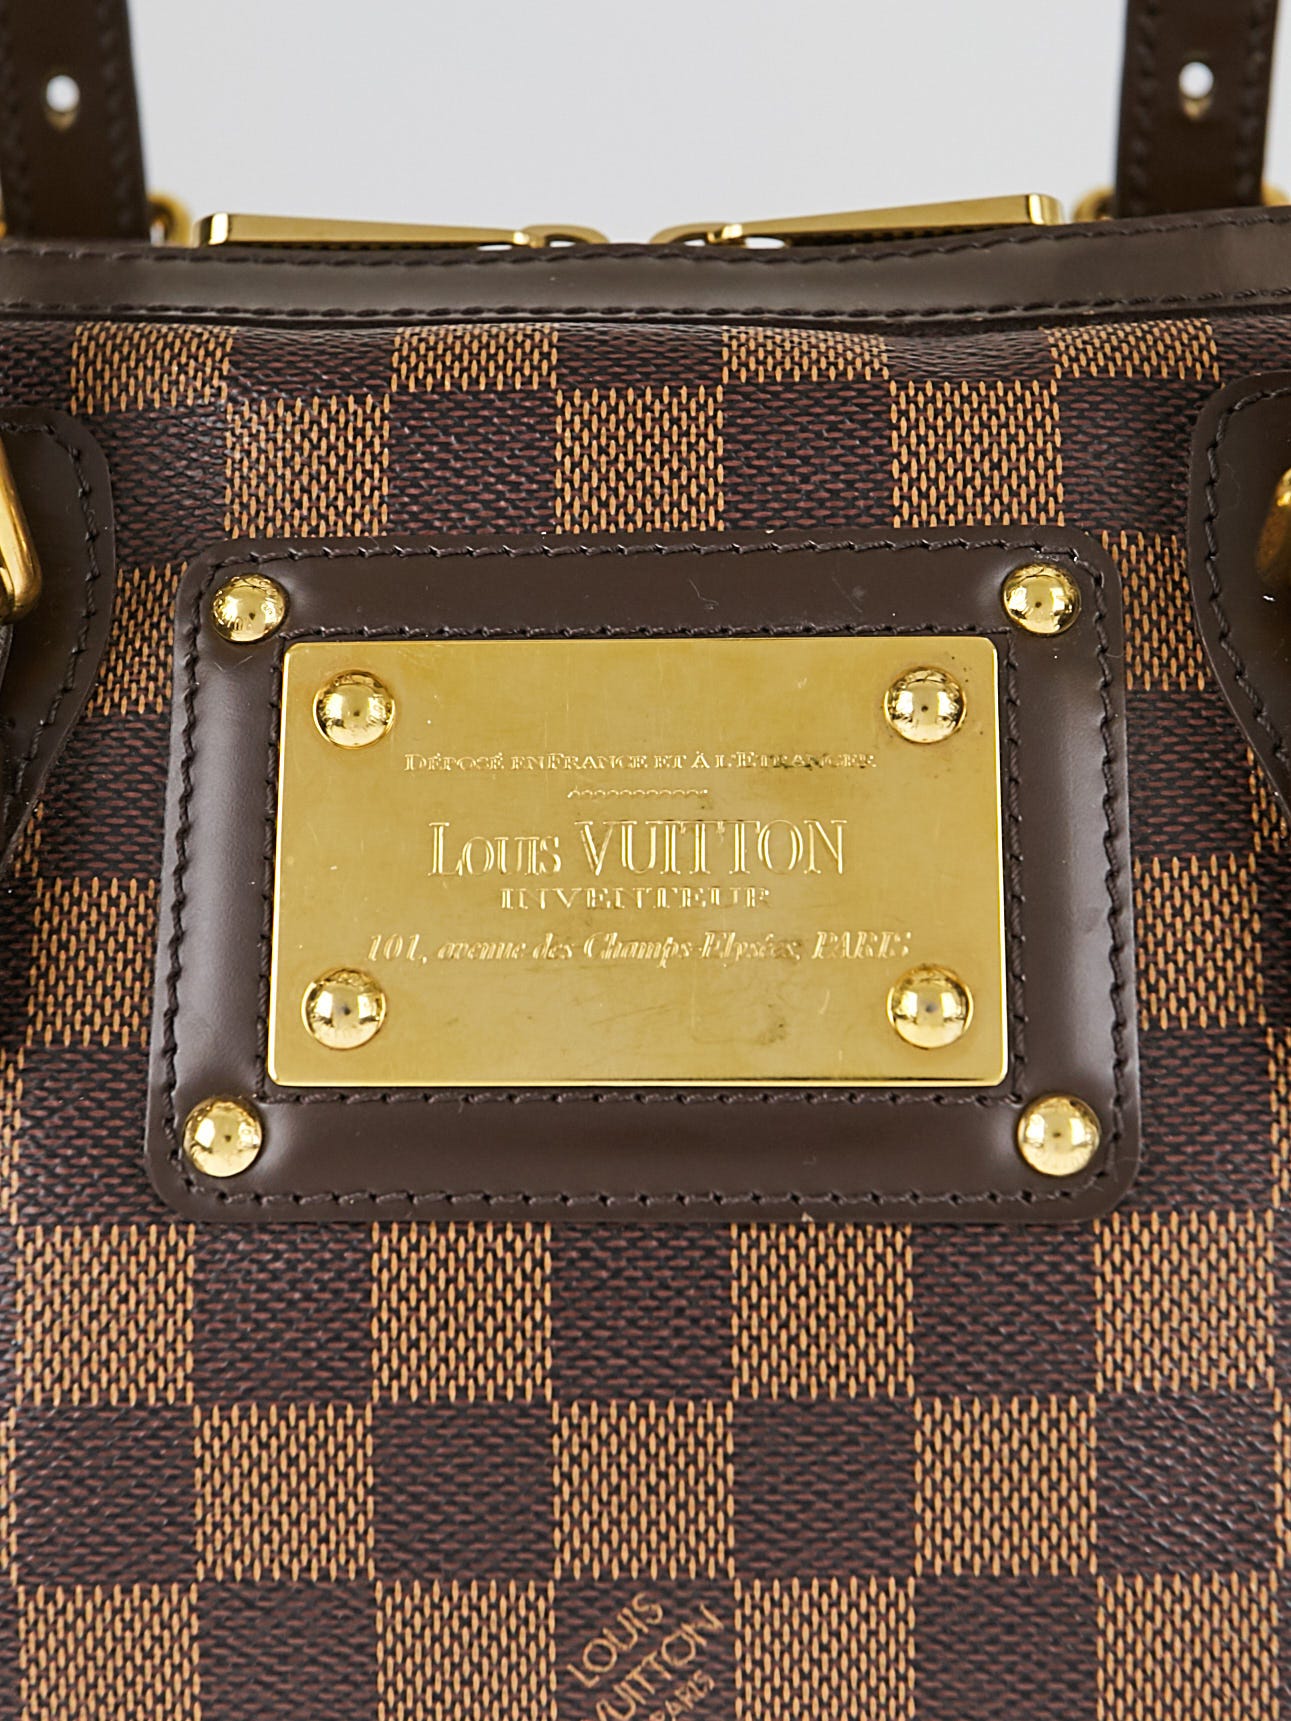 Louis Vuitton Damier Berkeley Available Now on Eluxury.com